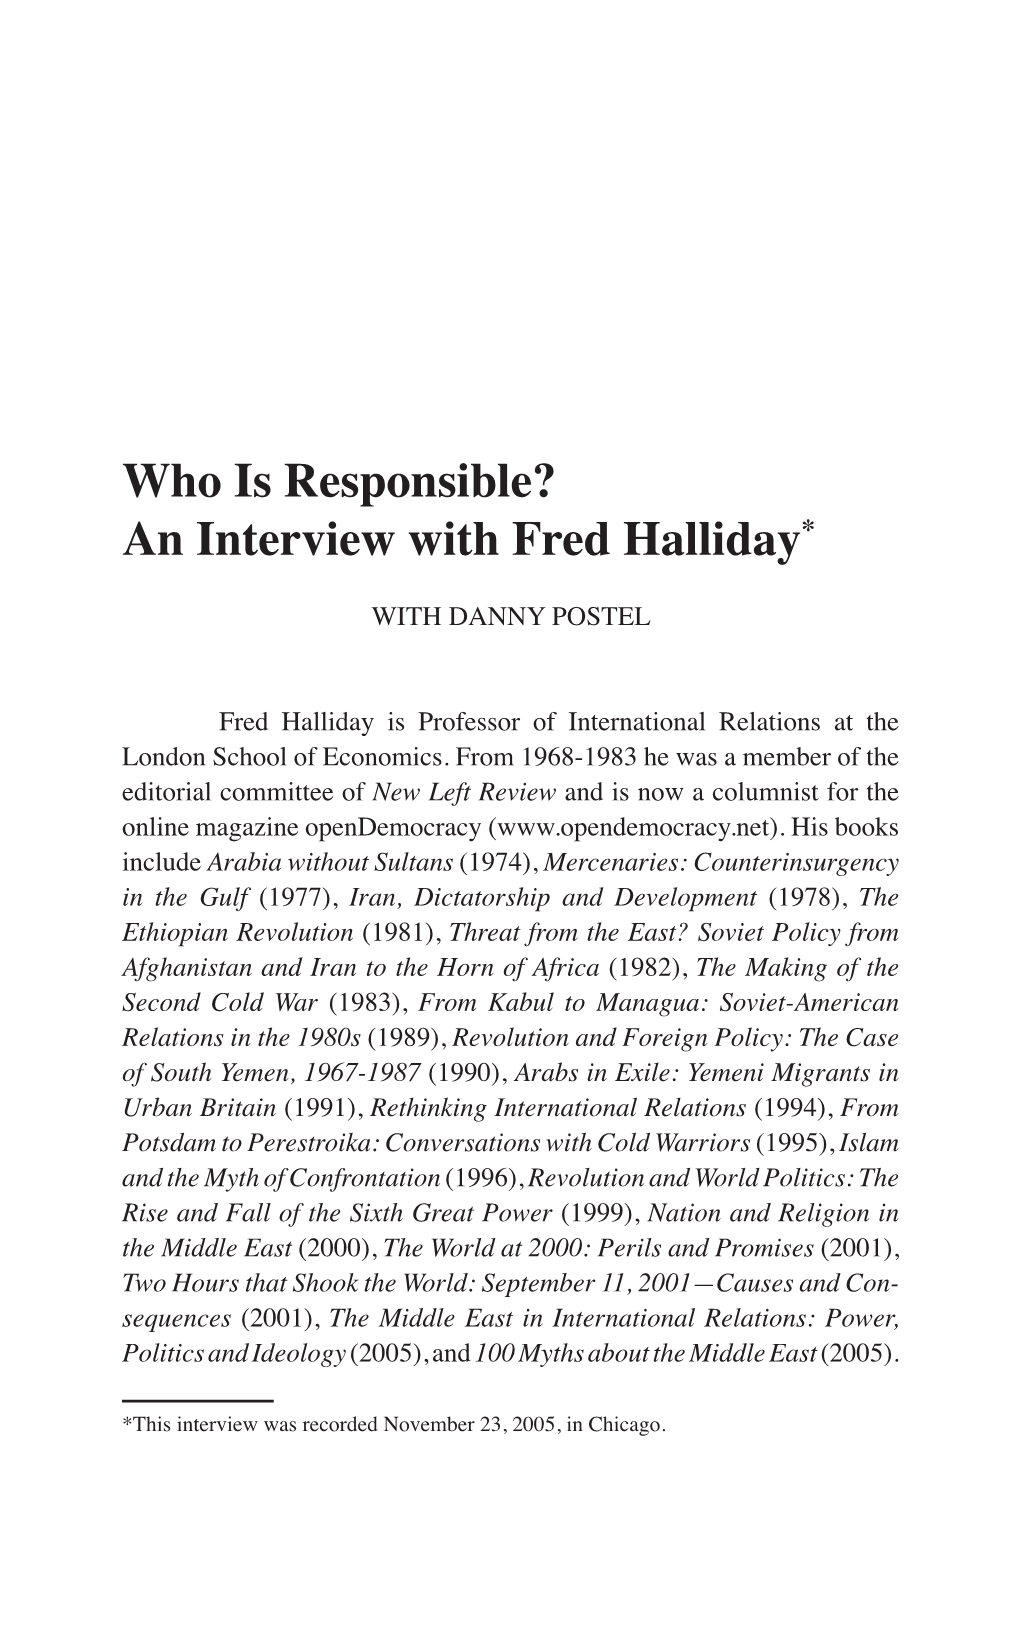 Fred Halliday*